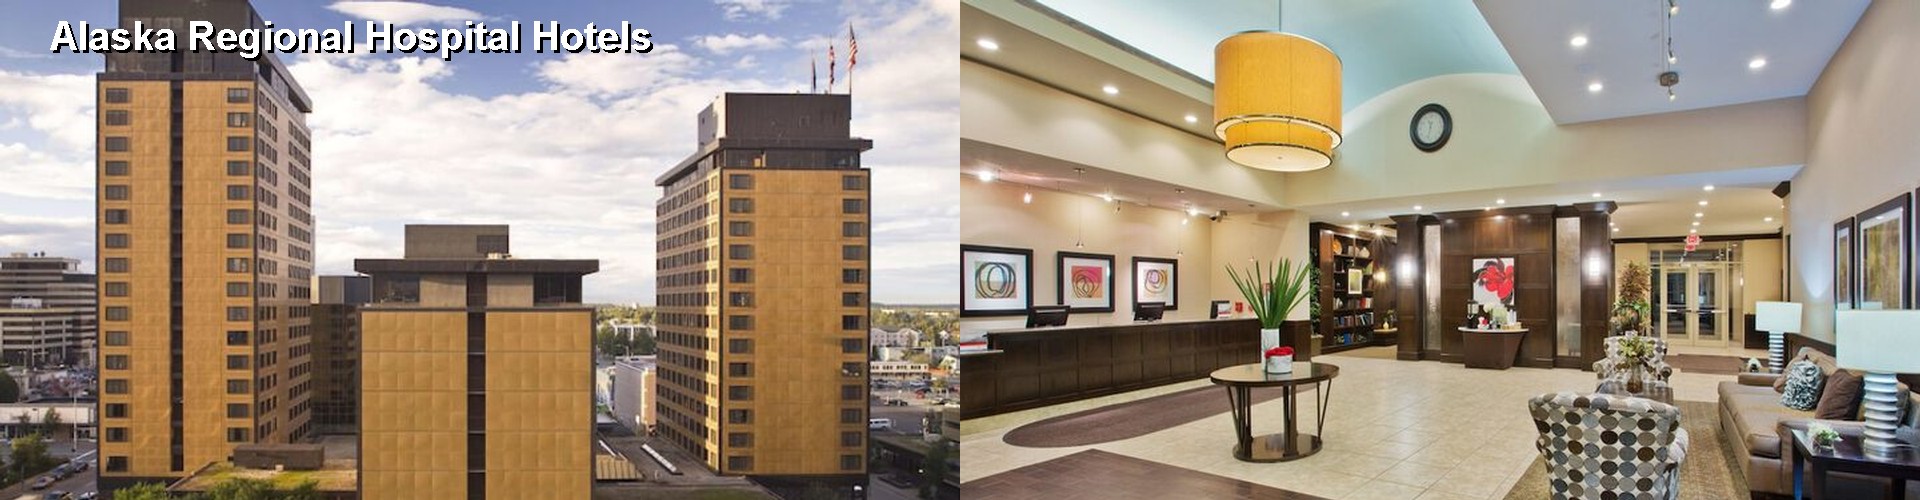 5 Best Hotels near Alaska Regional Hospital